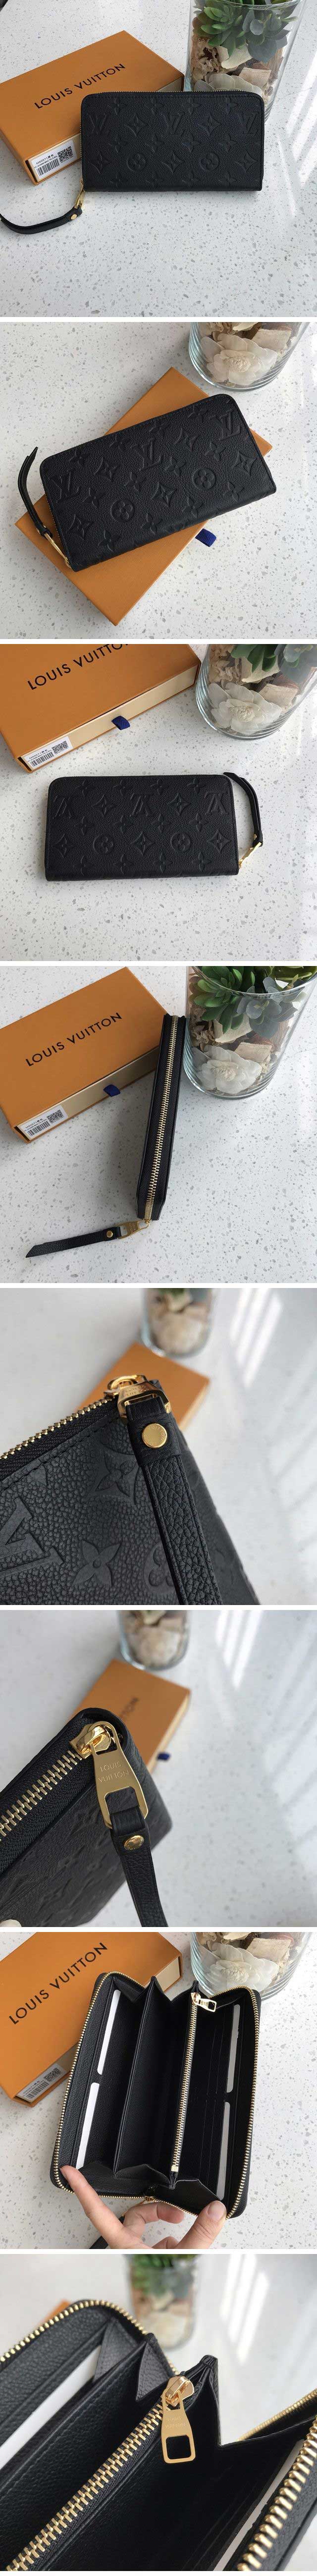 Louis Vuitton ルイヴィトン zippy wallet ジッピーウォレット M60571 black ブラック